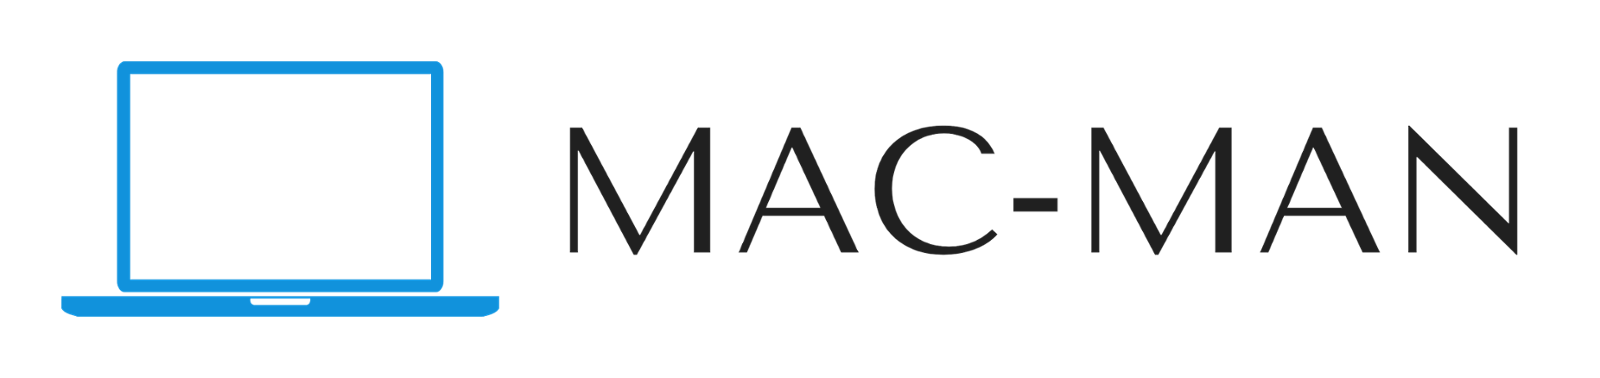 Mac-Man